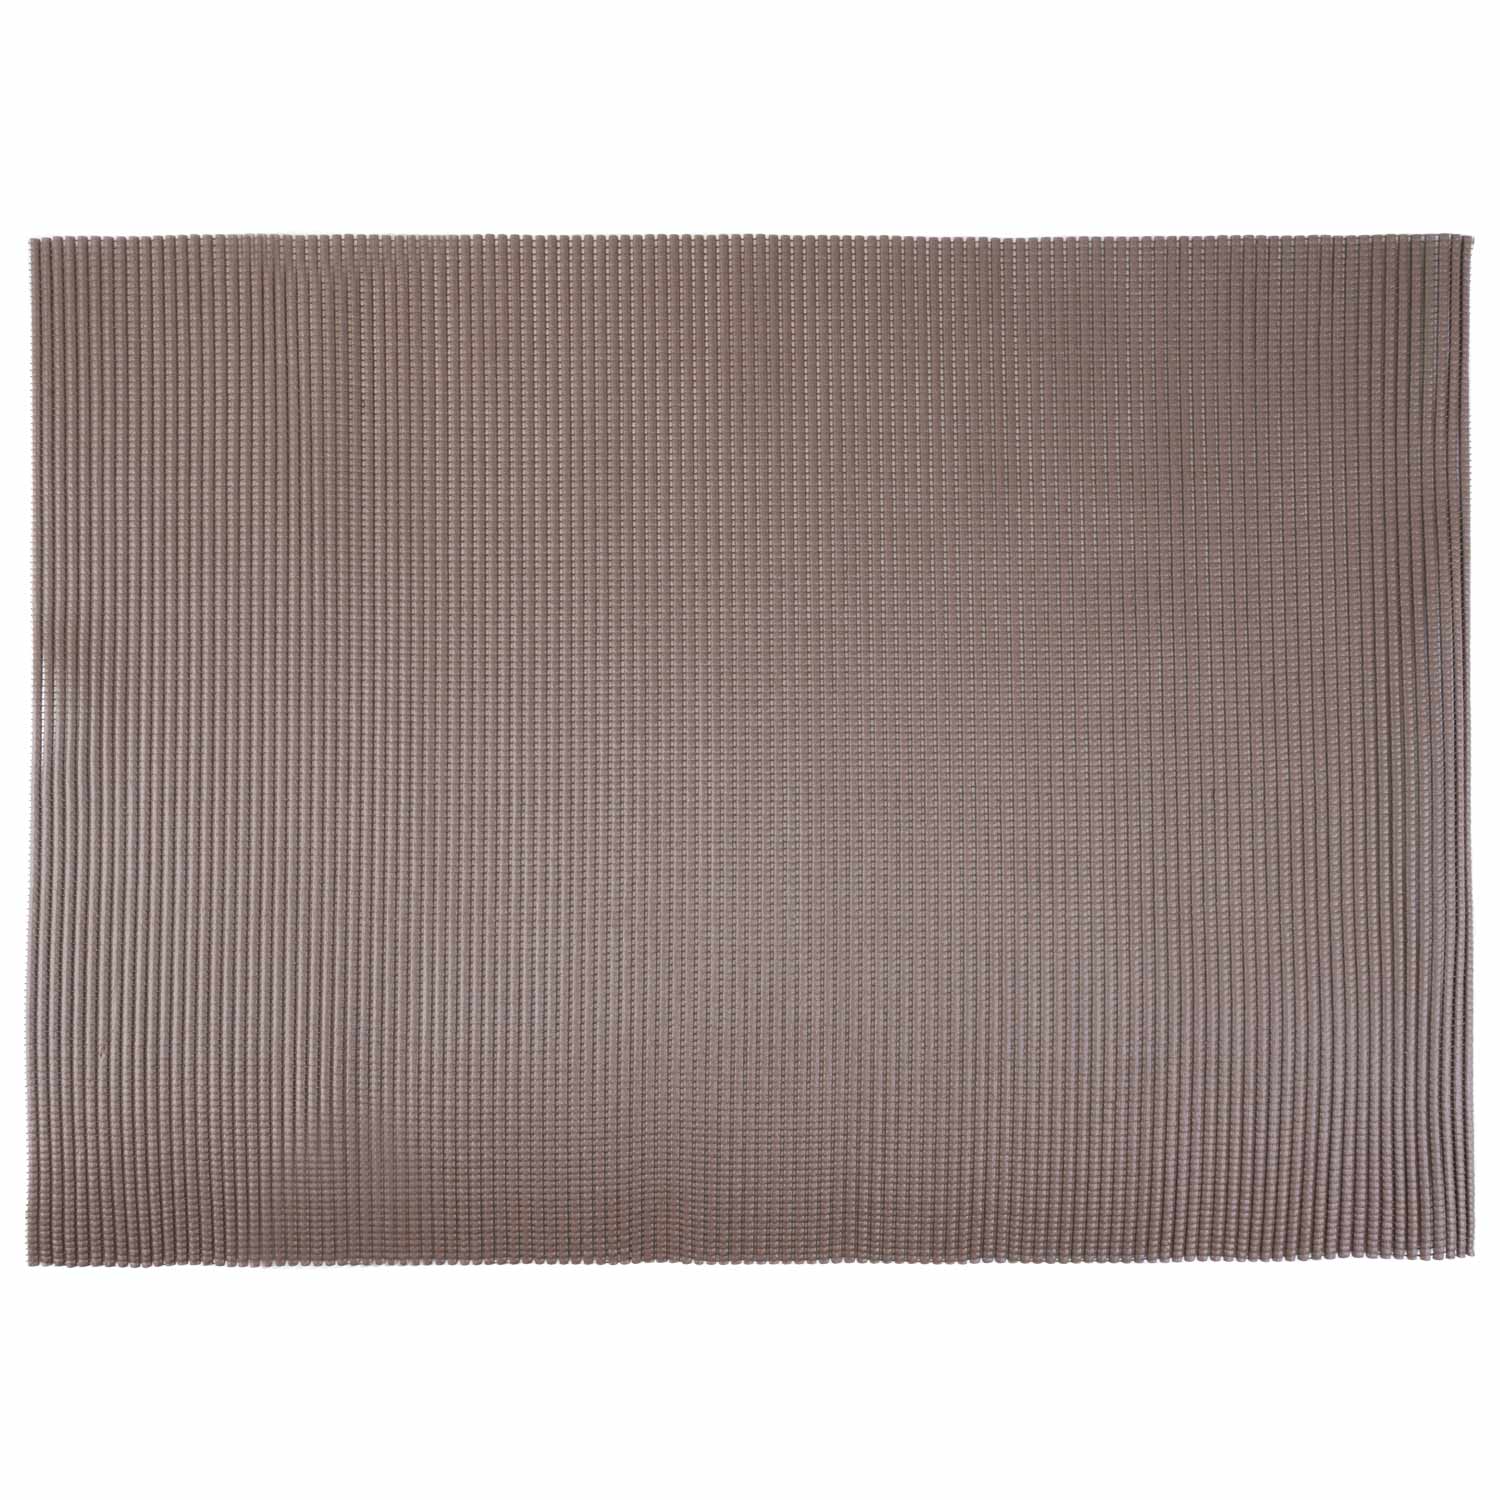 Non-adhesive PVC shelf liner, 25.5" x 4 feet - Brown